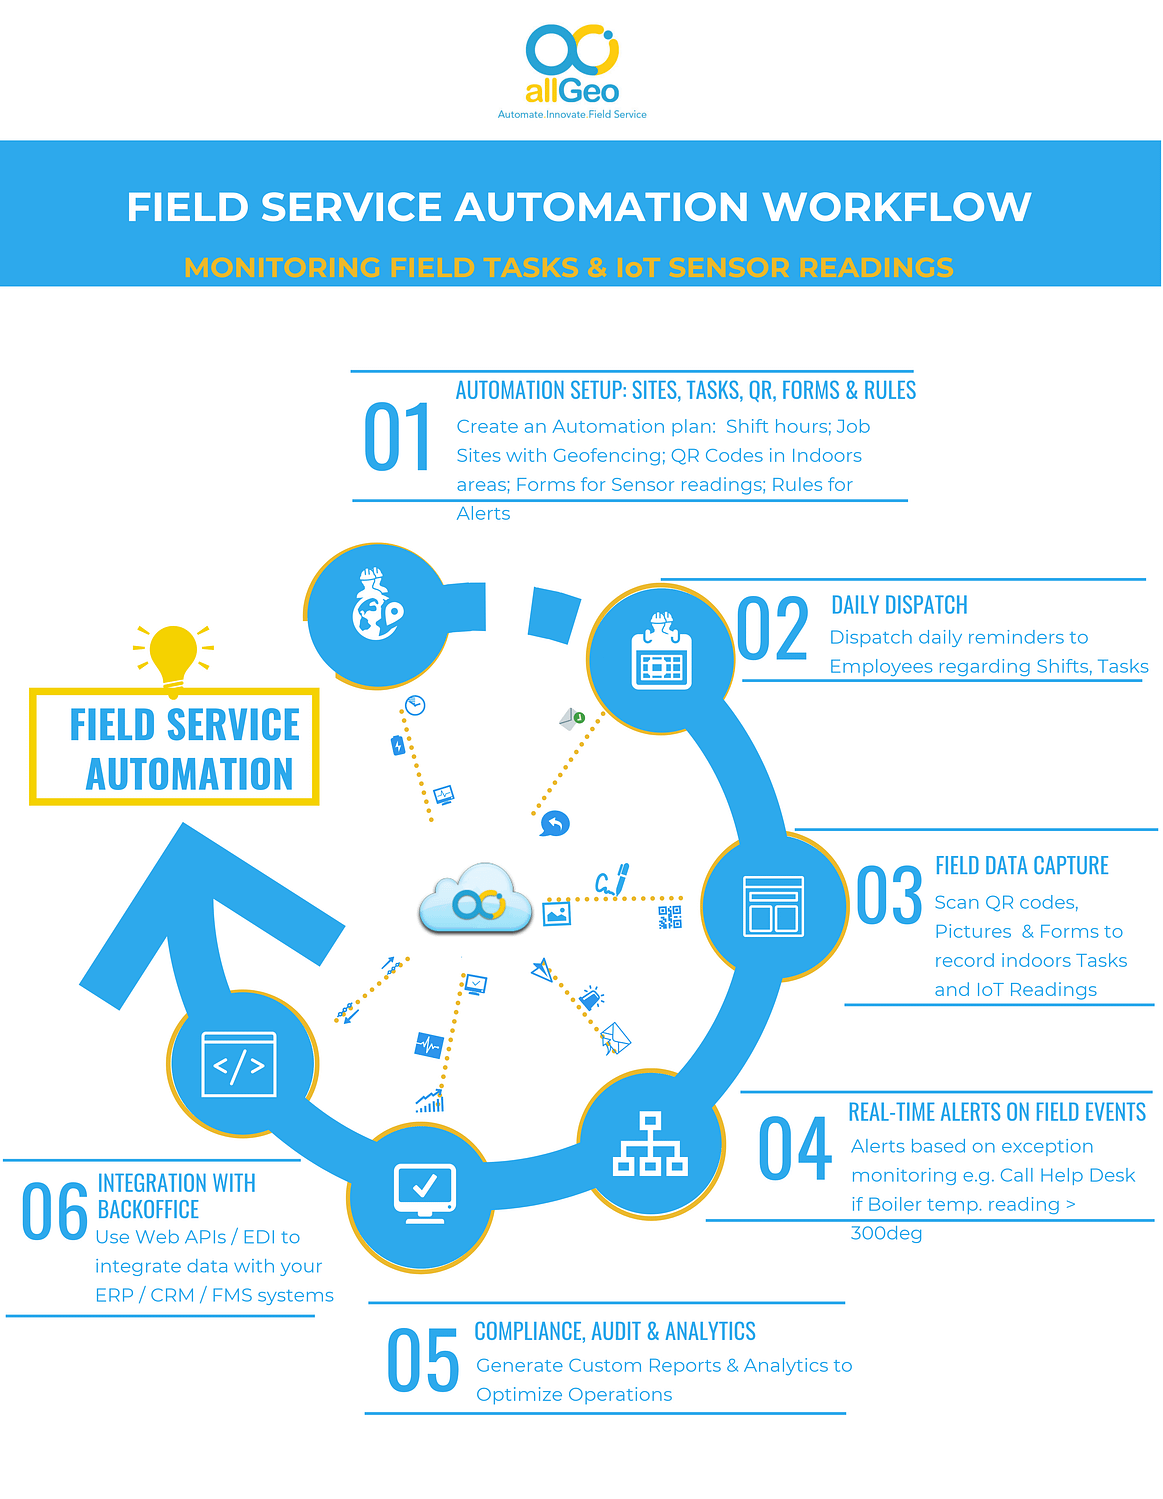 Field Service Automation workflow